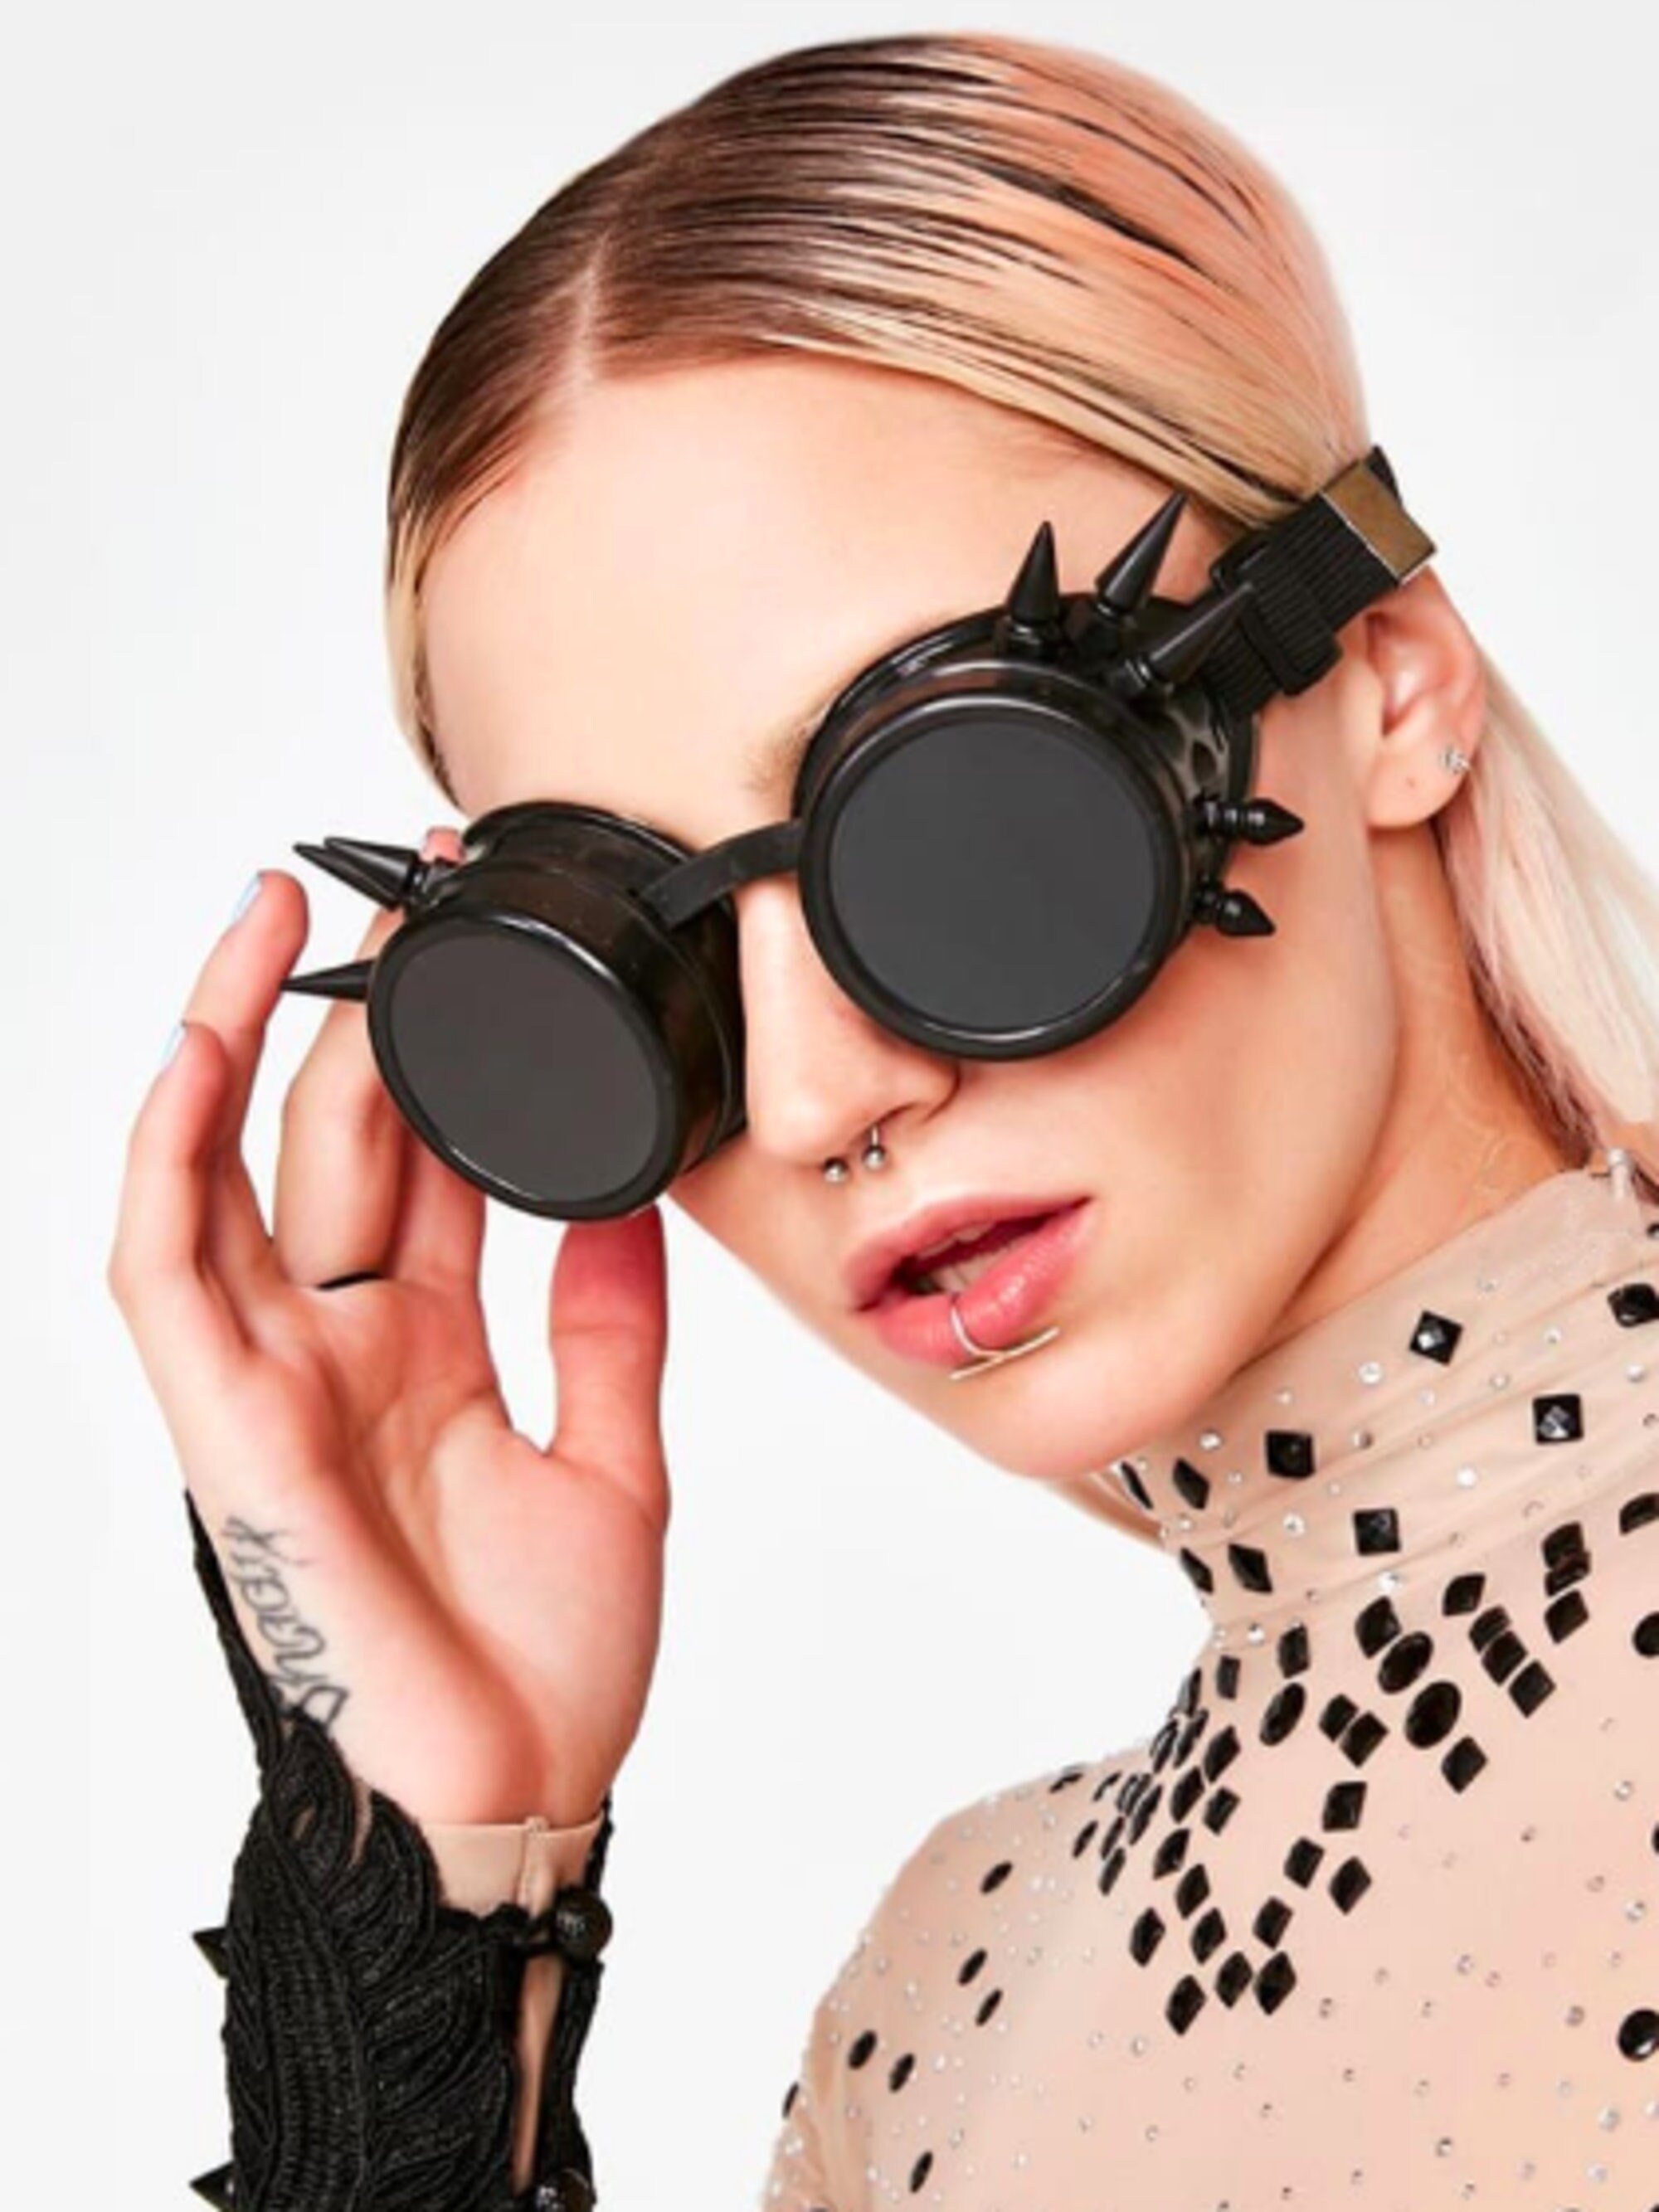 MFAZ Morefaz Ltd Welding Cyber Goggles Occhiali da Sole Steampunk Goth Cosplay Loupe Sunglasses Party Dress 